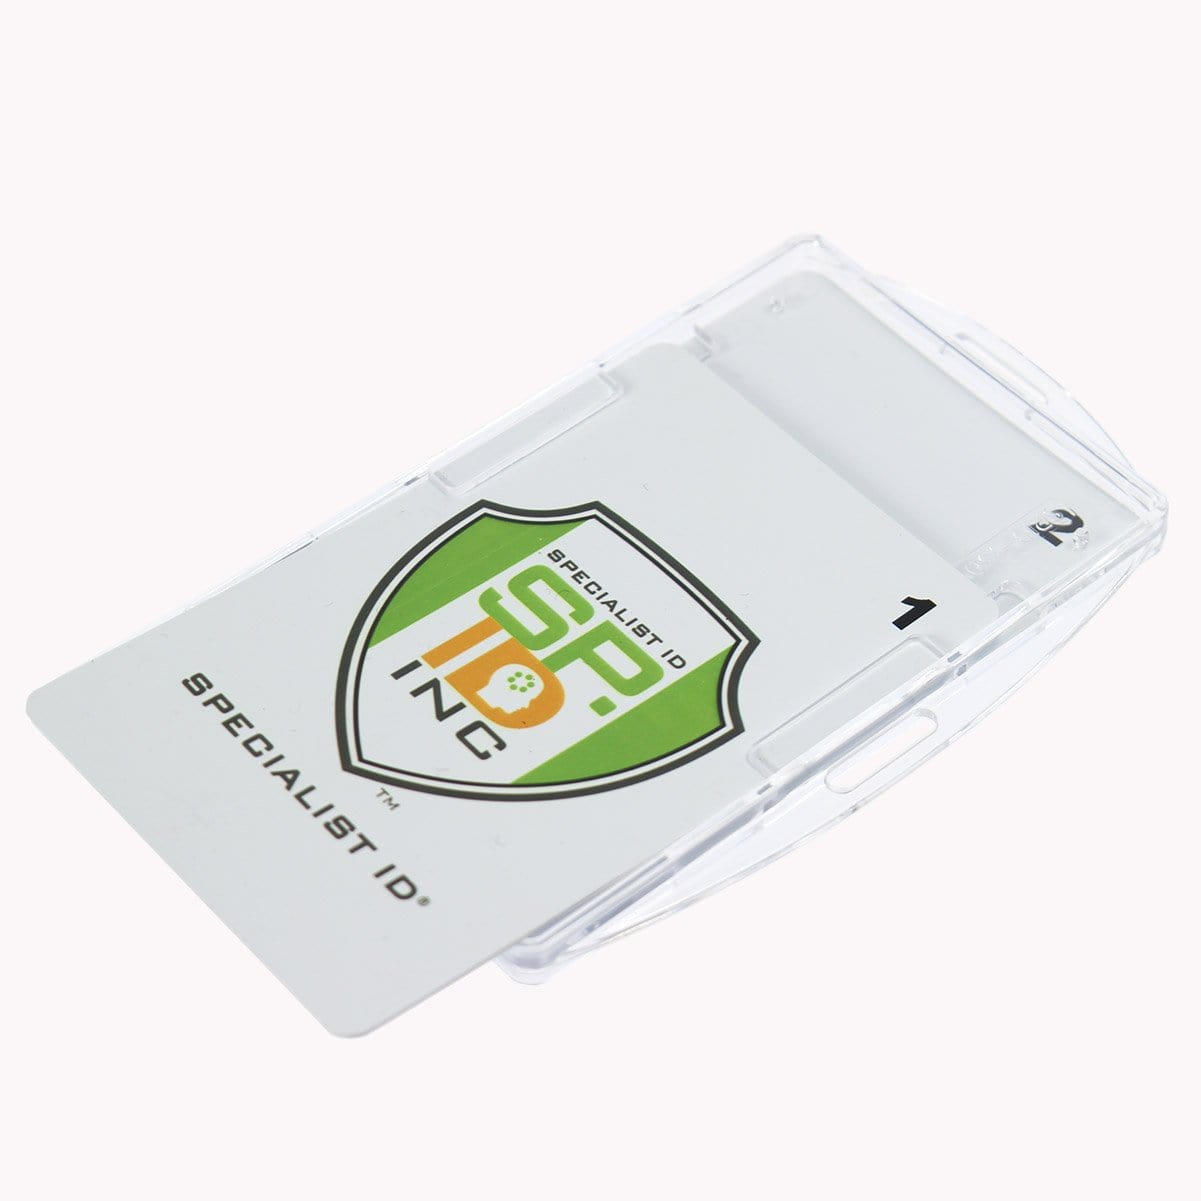 NO MOQ Acrylic Crystal Staff Access id lanyard Card badge holder